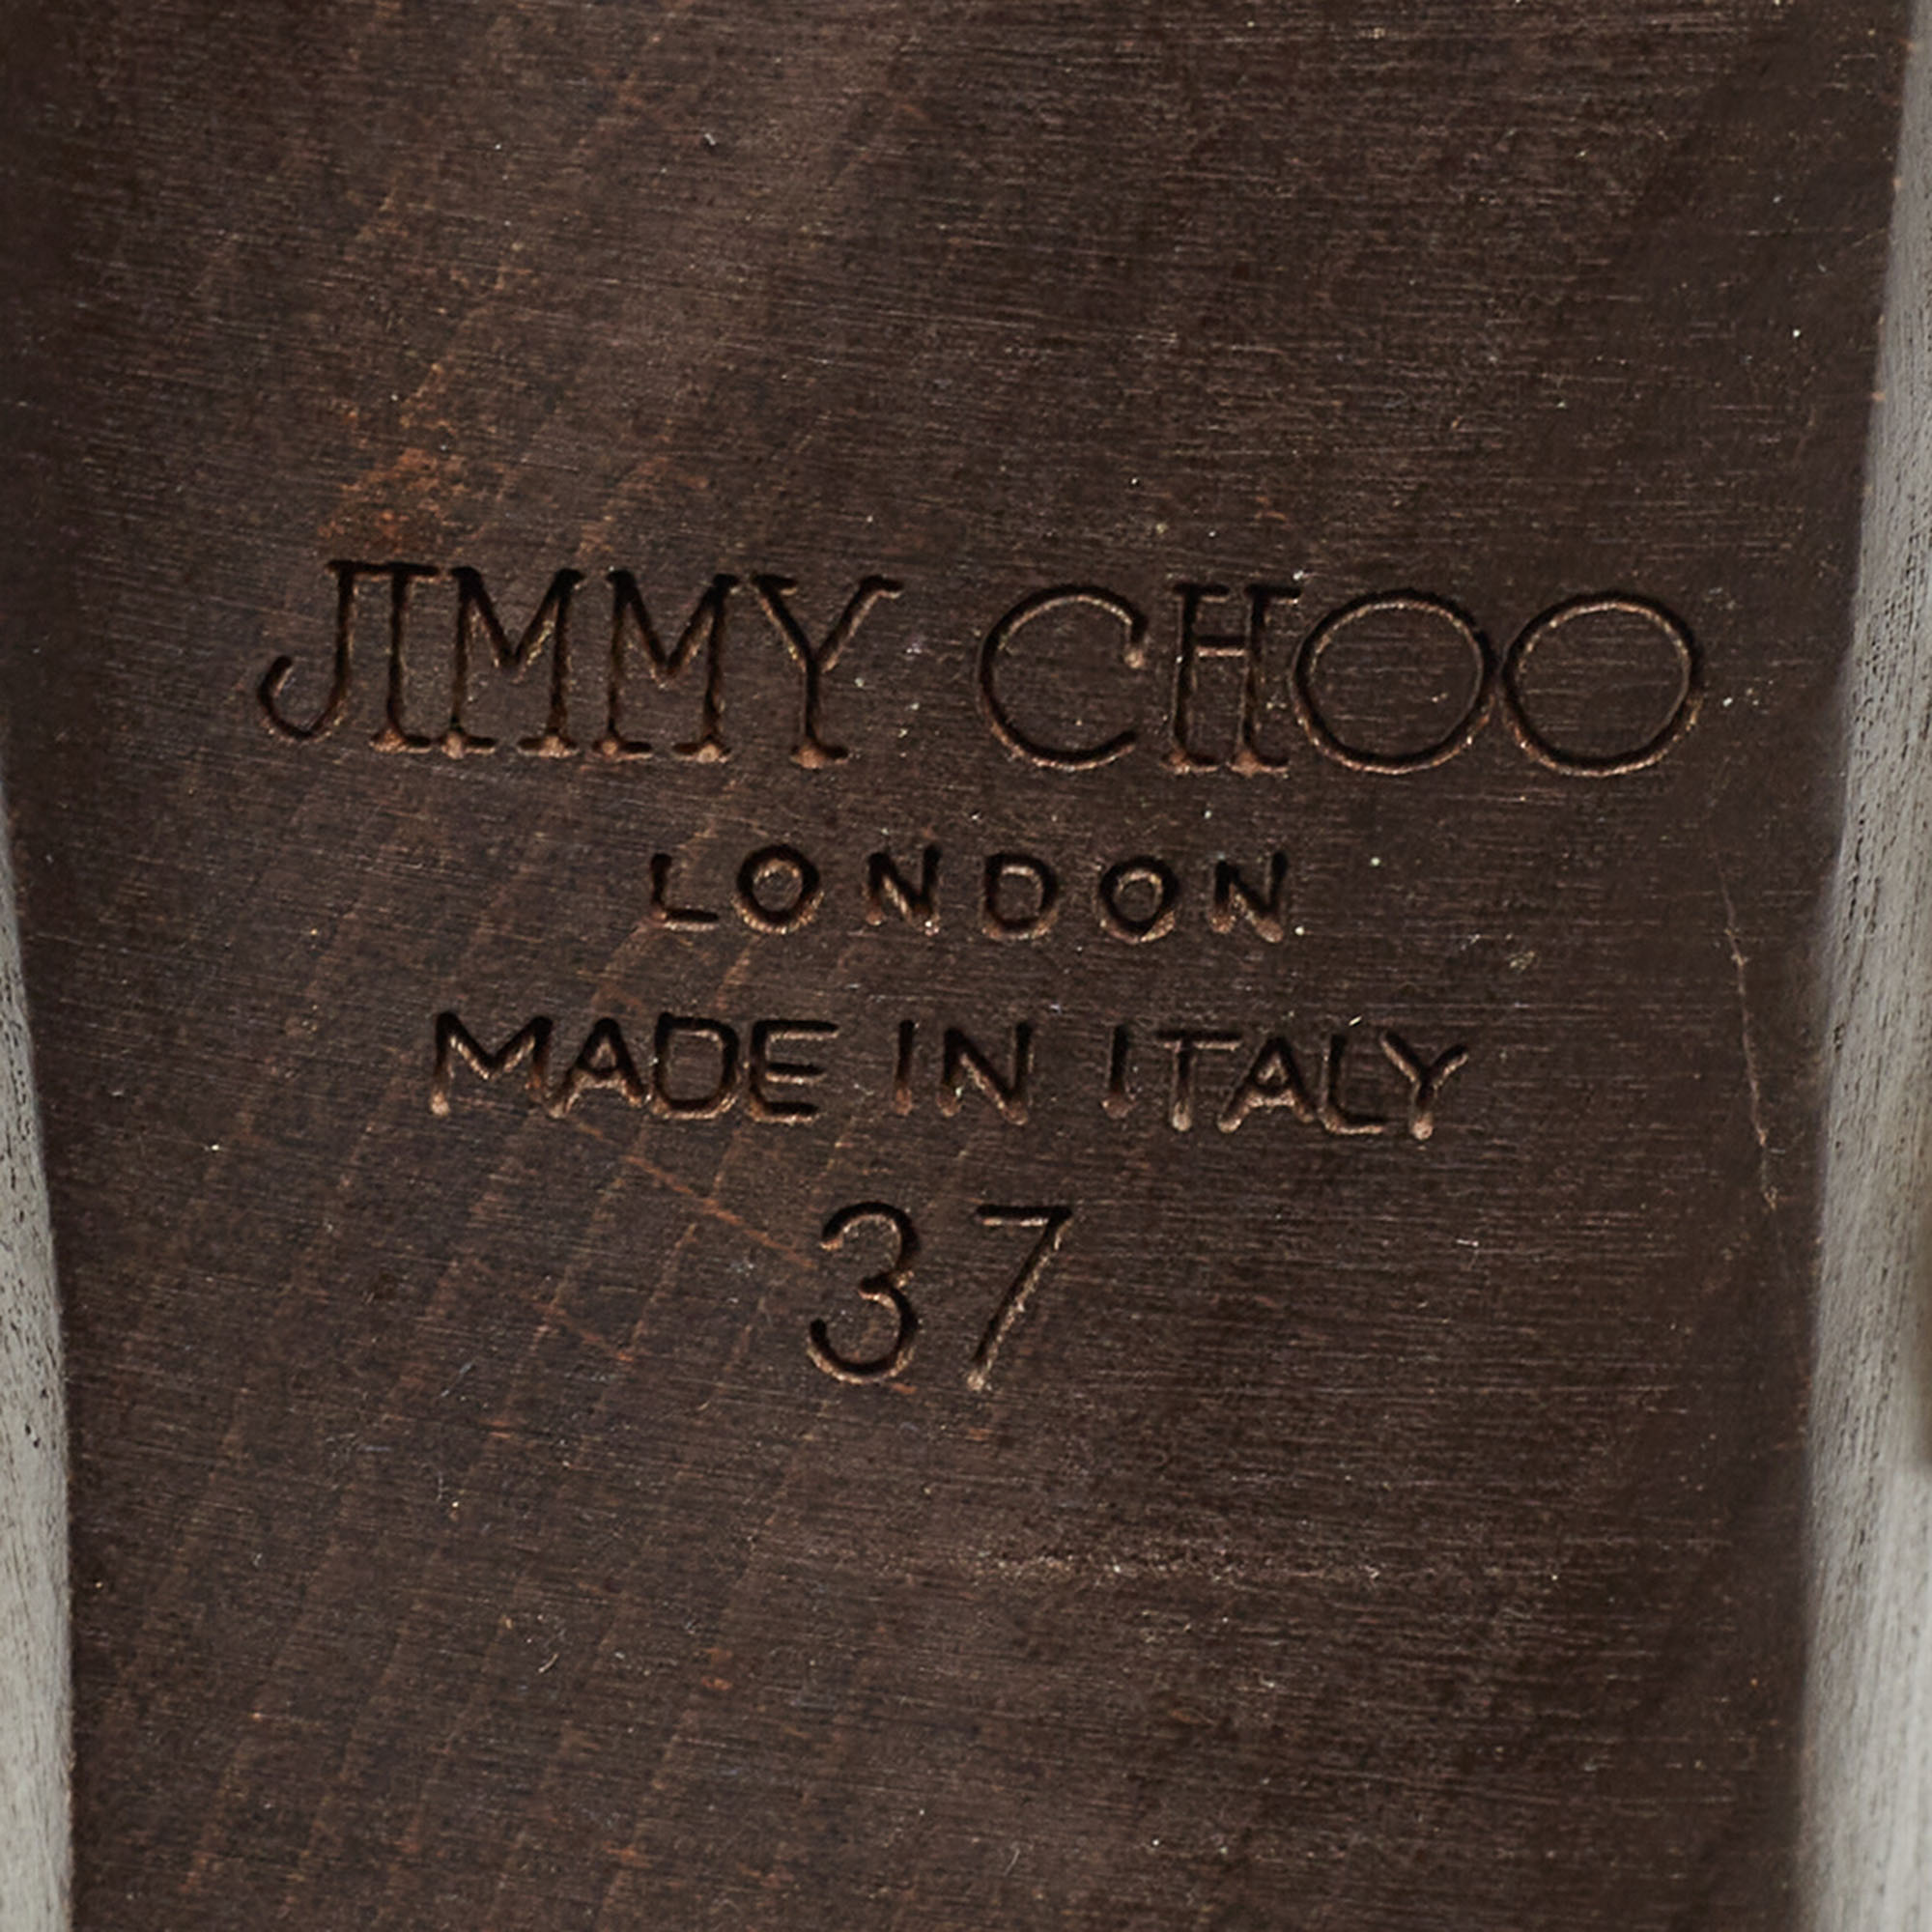 Jimmy Choo Brown/Beige Python Embossed Leather Strappy Platform Sandals Size 37